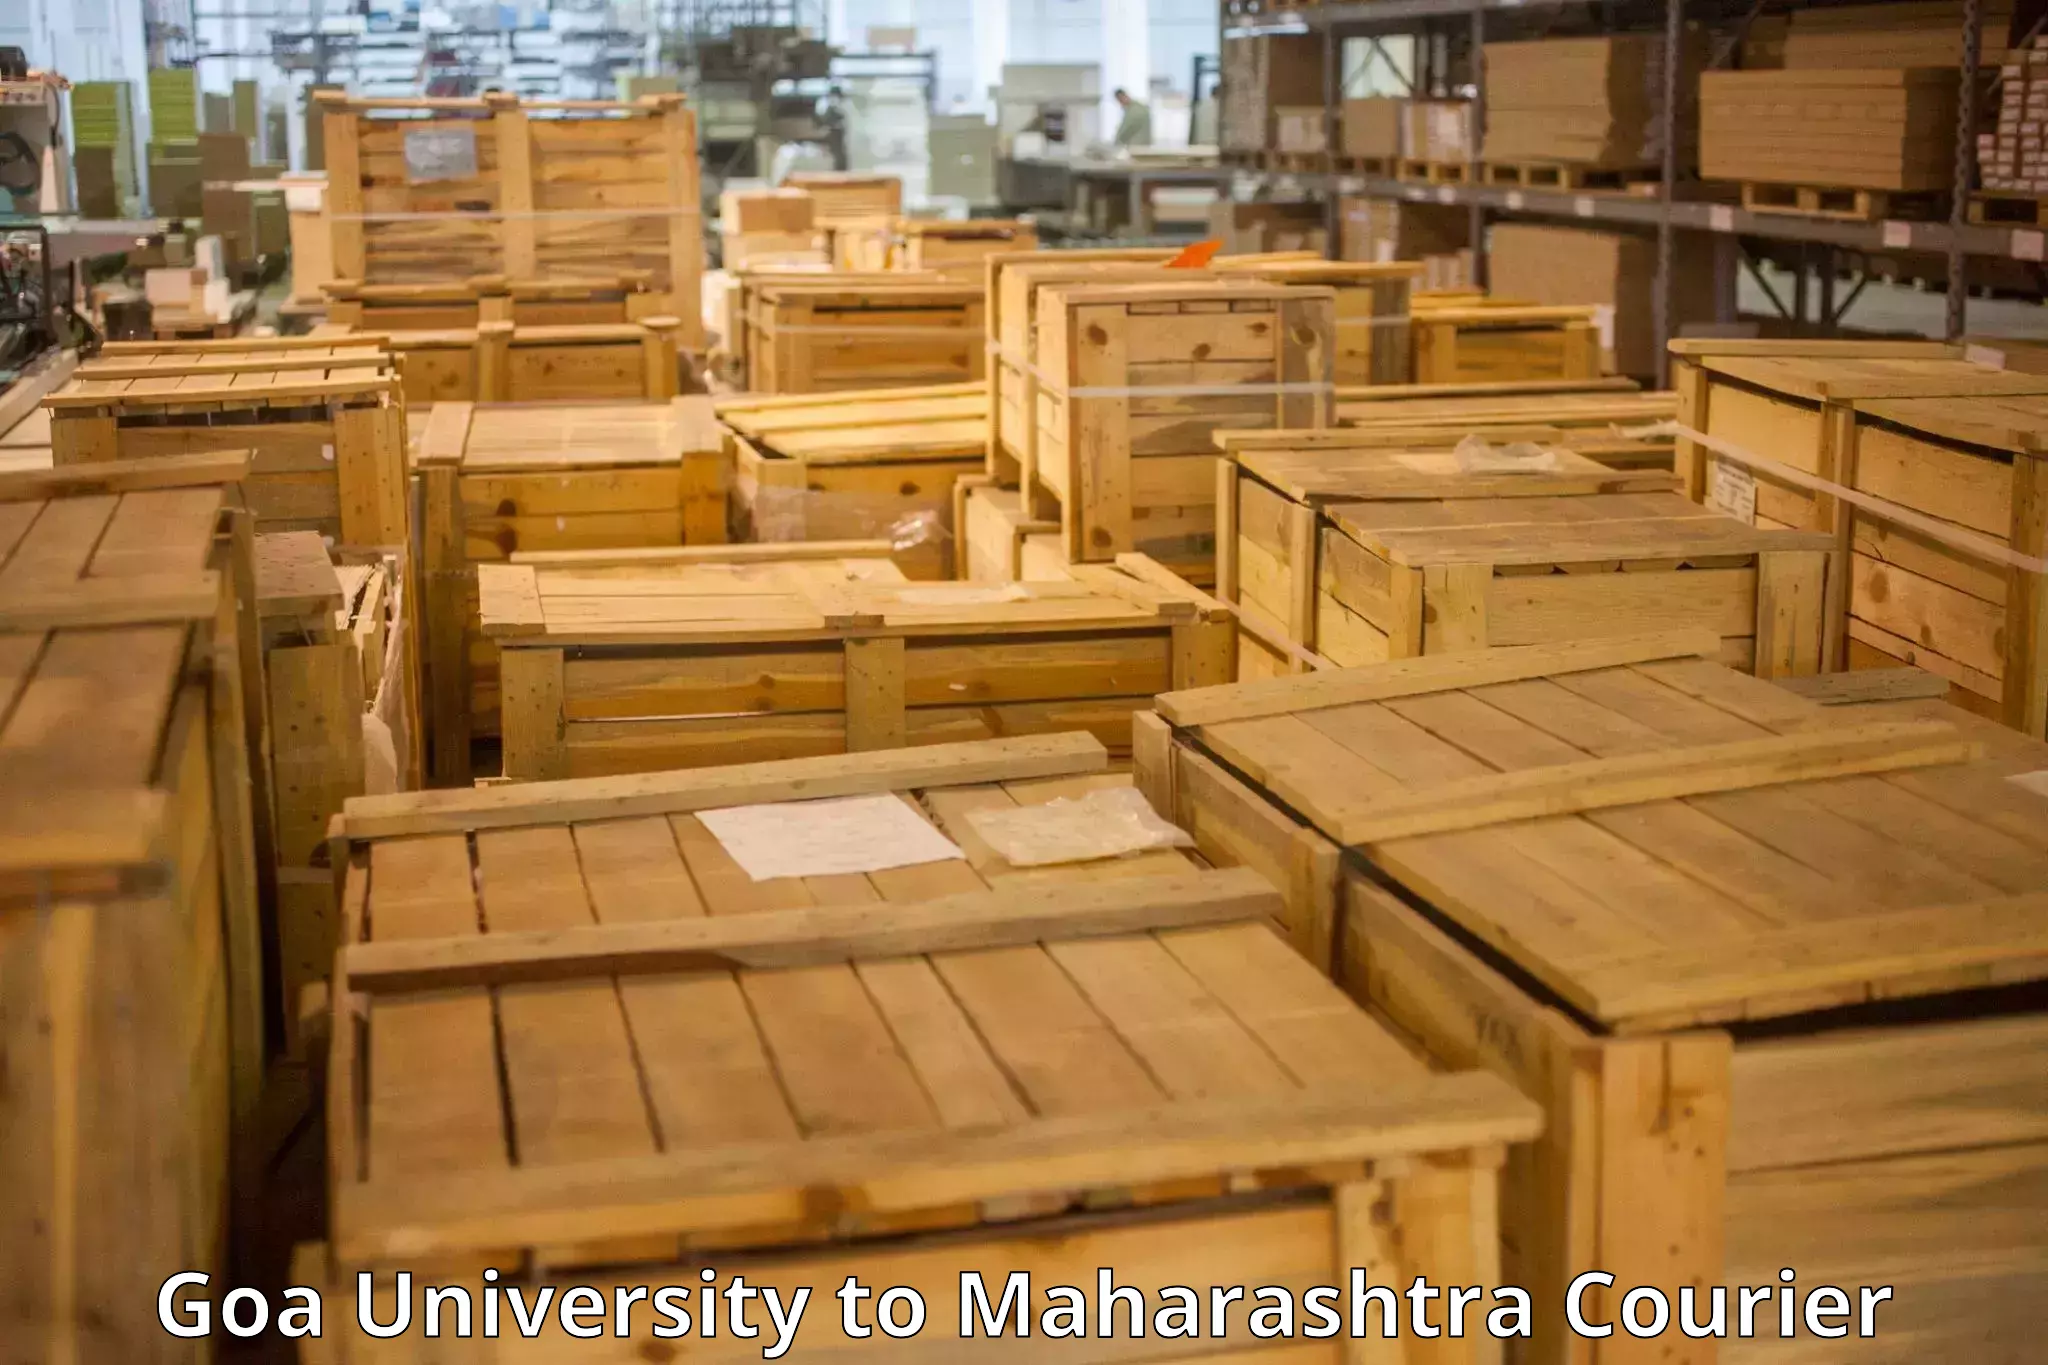 Baggage shipping experience Goa University to Mahabaleshwar